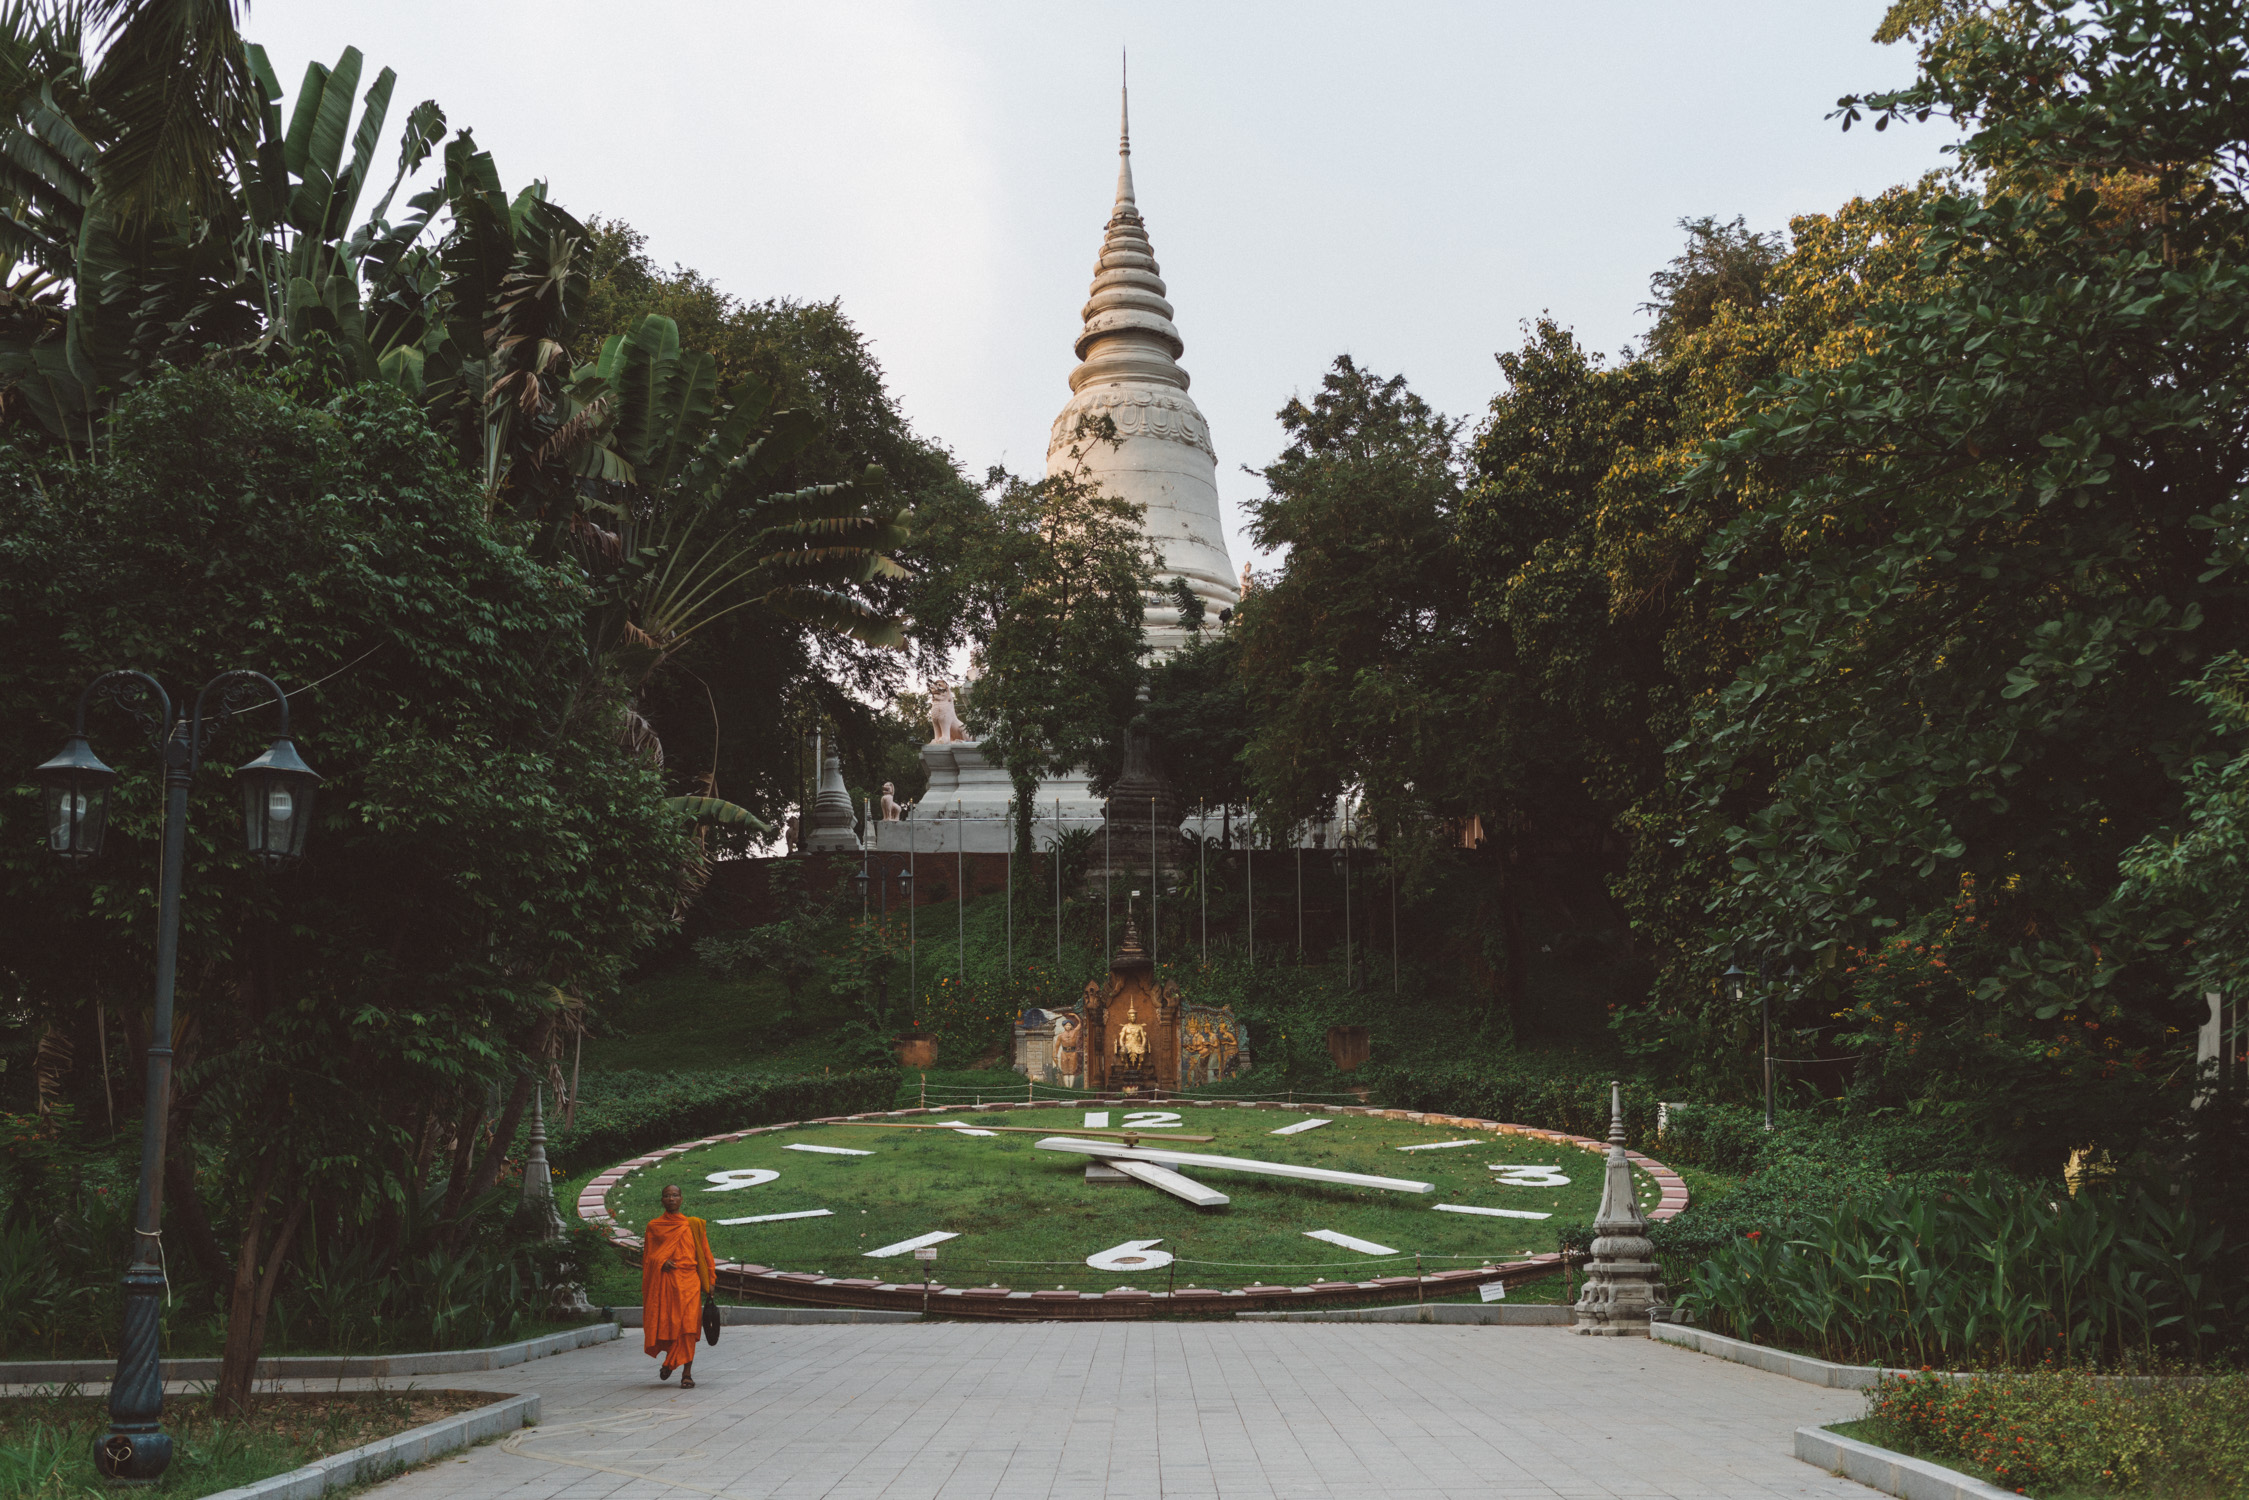 Monk in Phnom Penh temple [David Tan]